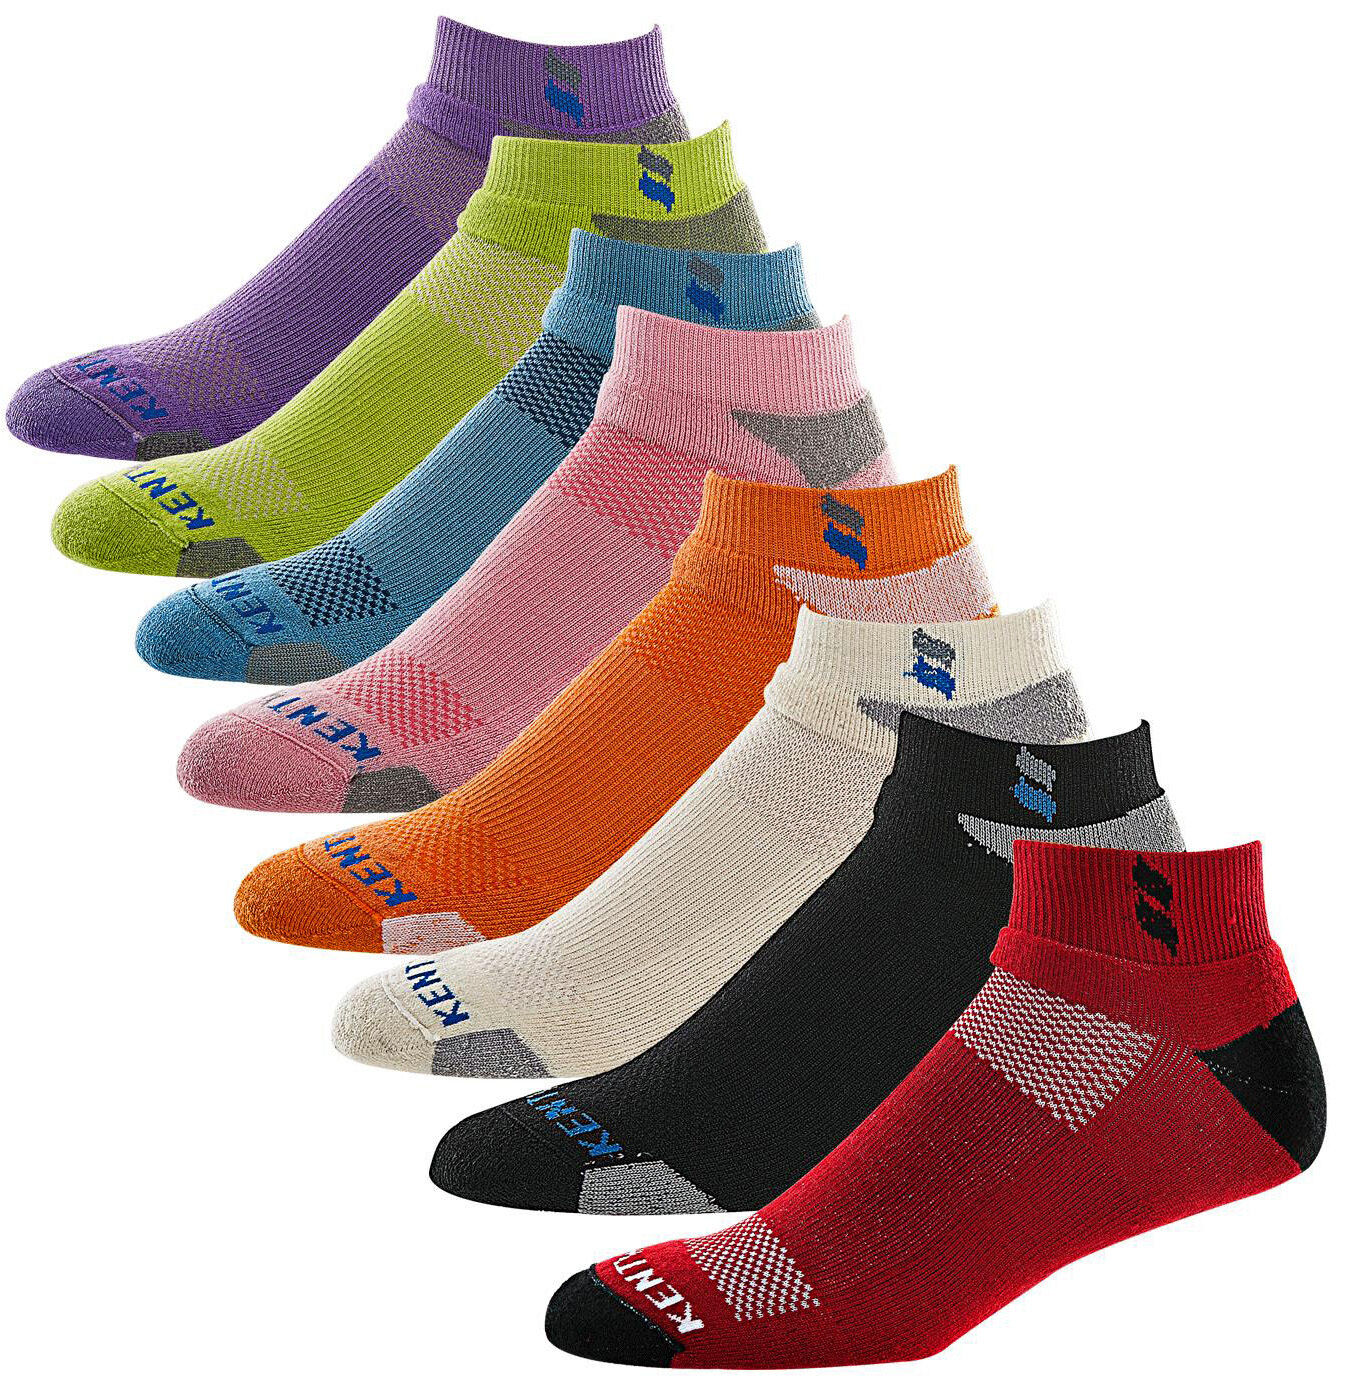 Kentwool Golf Socks - Men's - Great Styles & Colors-tour Profile & Game Day-nip